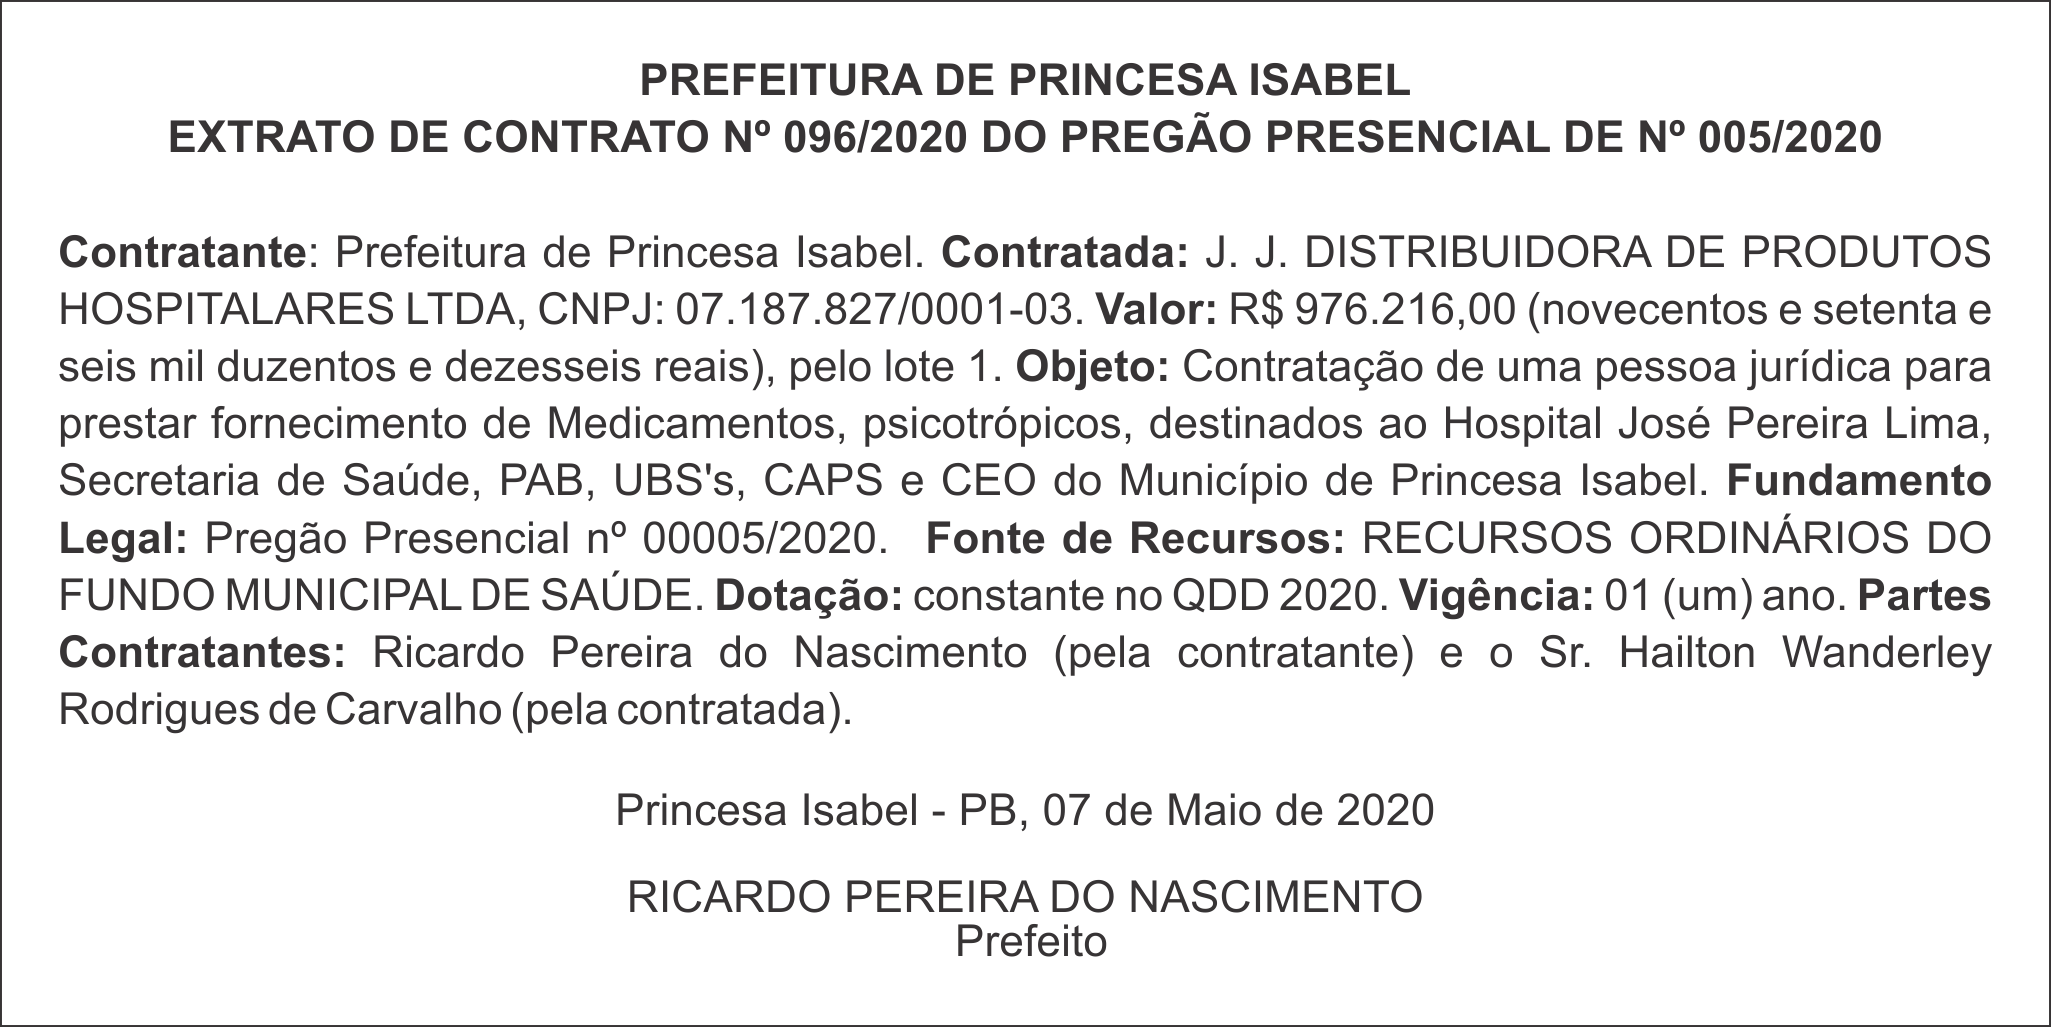 PREFEITURA DE PRINCESA ISABEL – EXTRATO DE CONTRATO Nº 096/2020 – PREGÃO PRESENCIAL Nº 005/2020